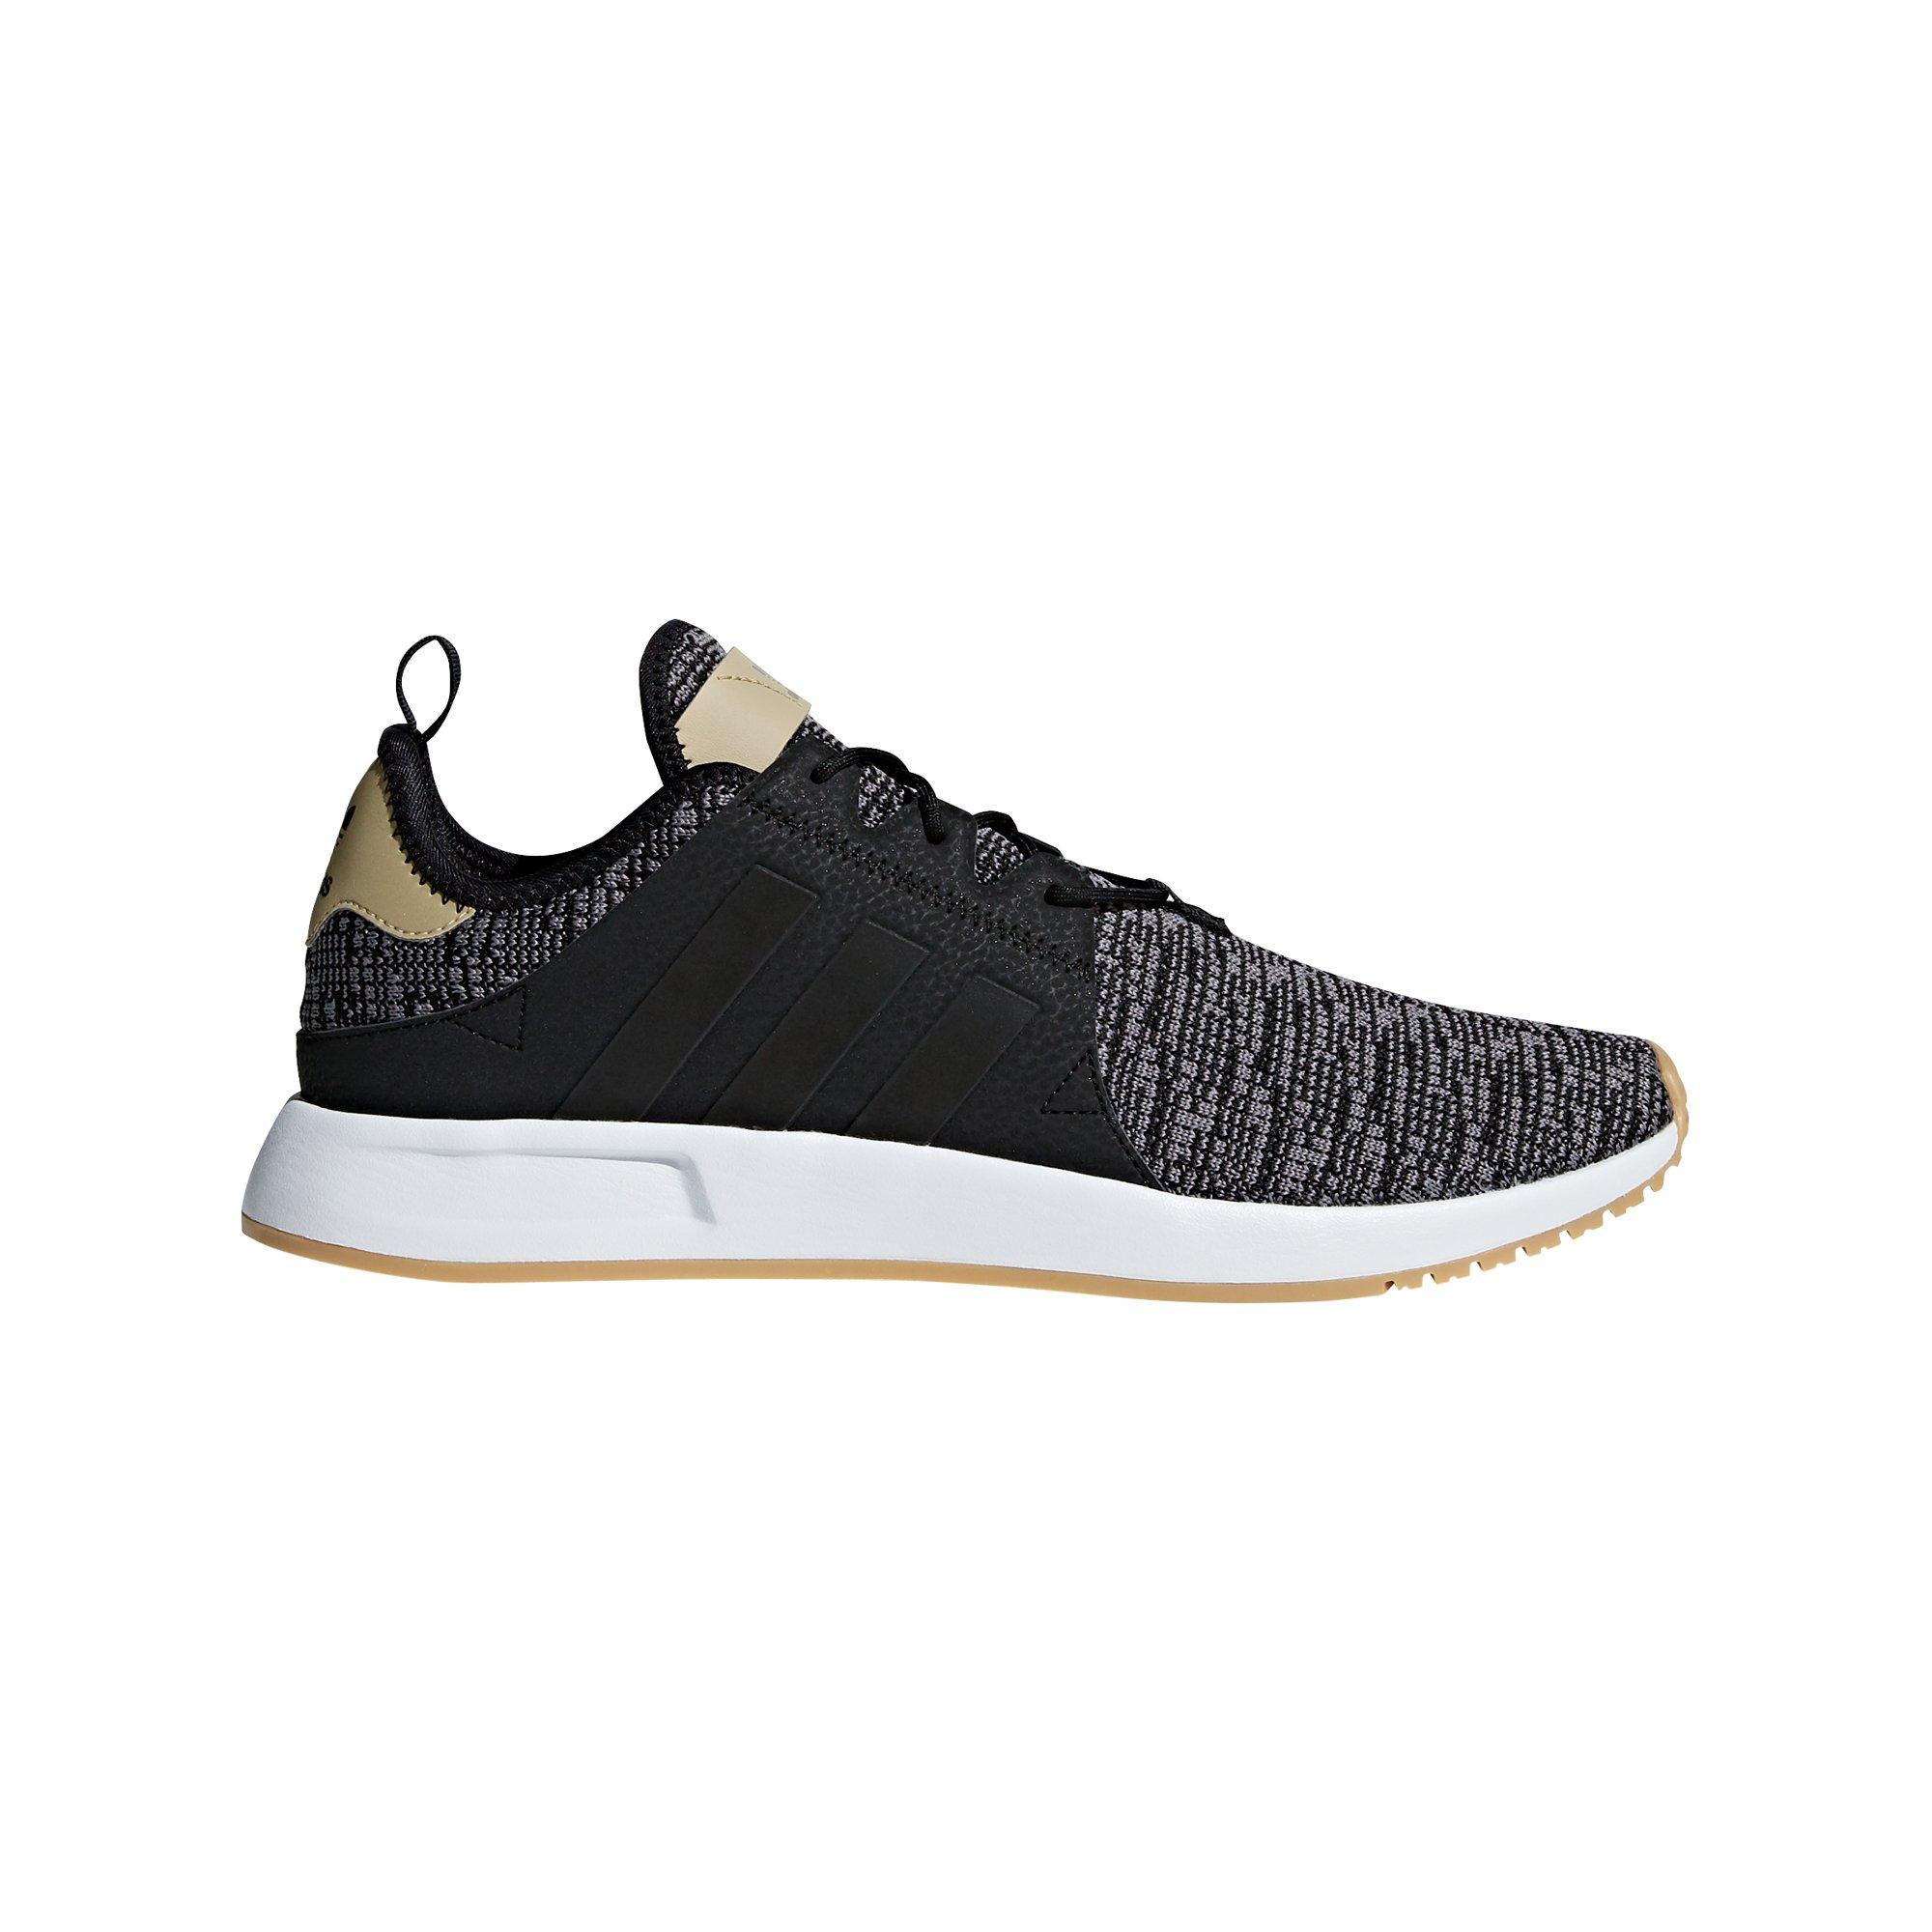 adidas x_plr knit black & gum shoes